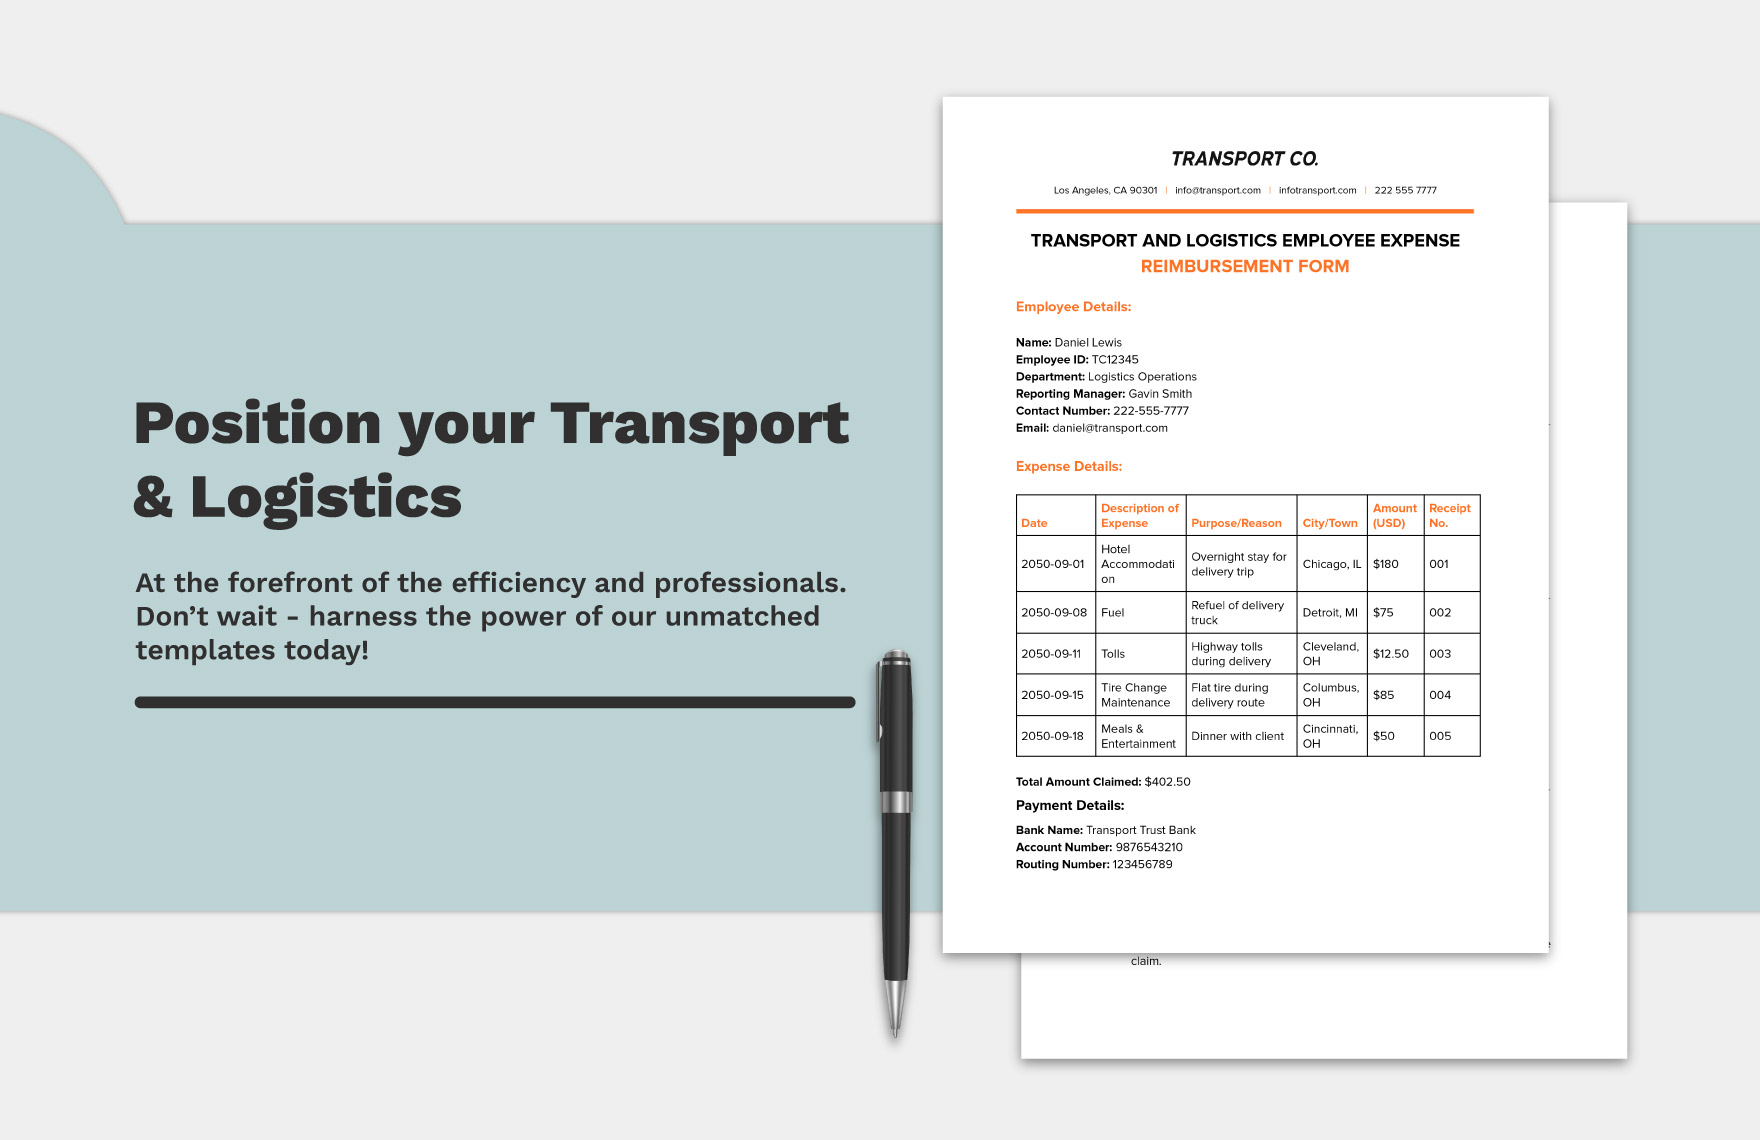 Transport and Logistics Employee Expense Reimbursement Form Template